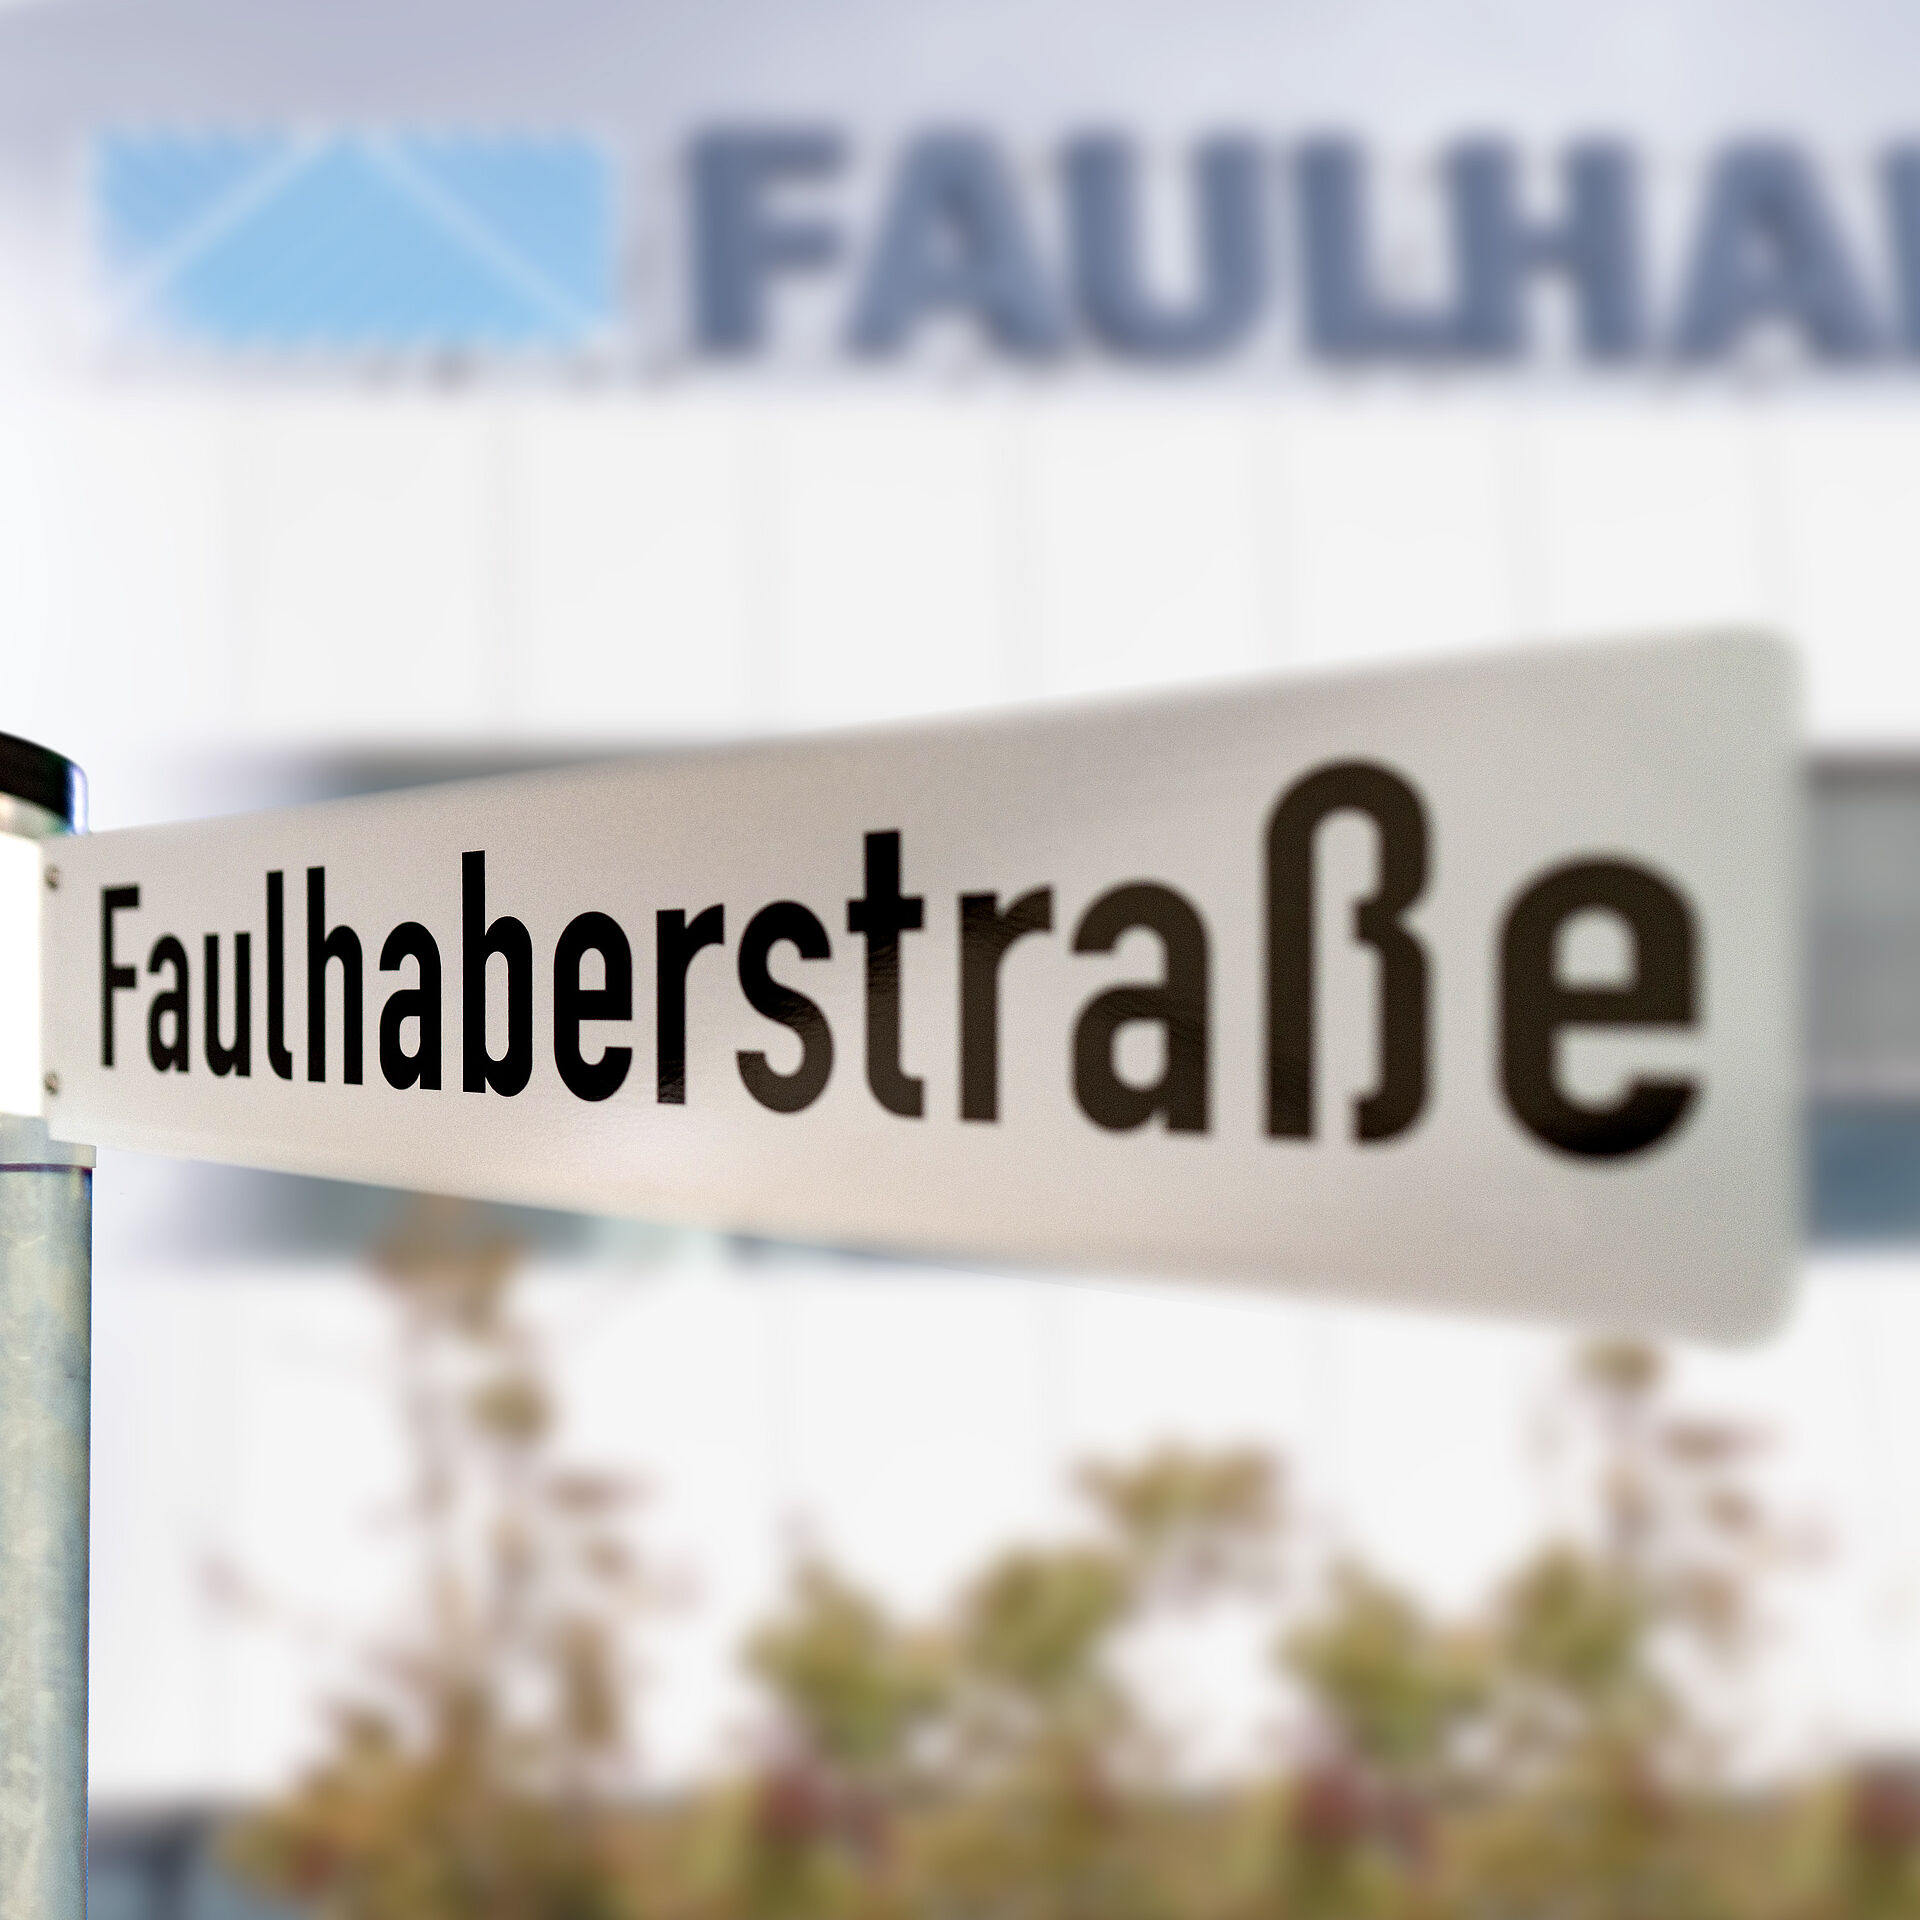 FAULHABER new street sign